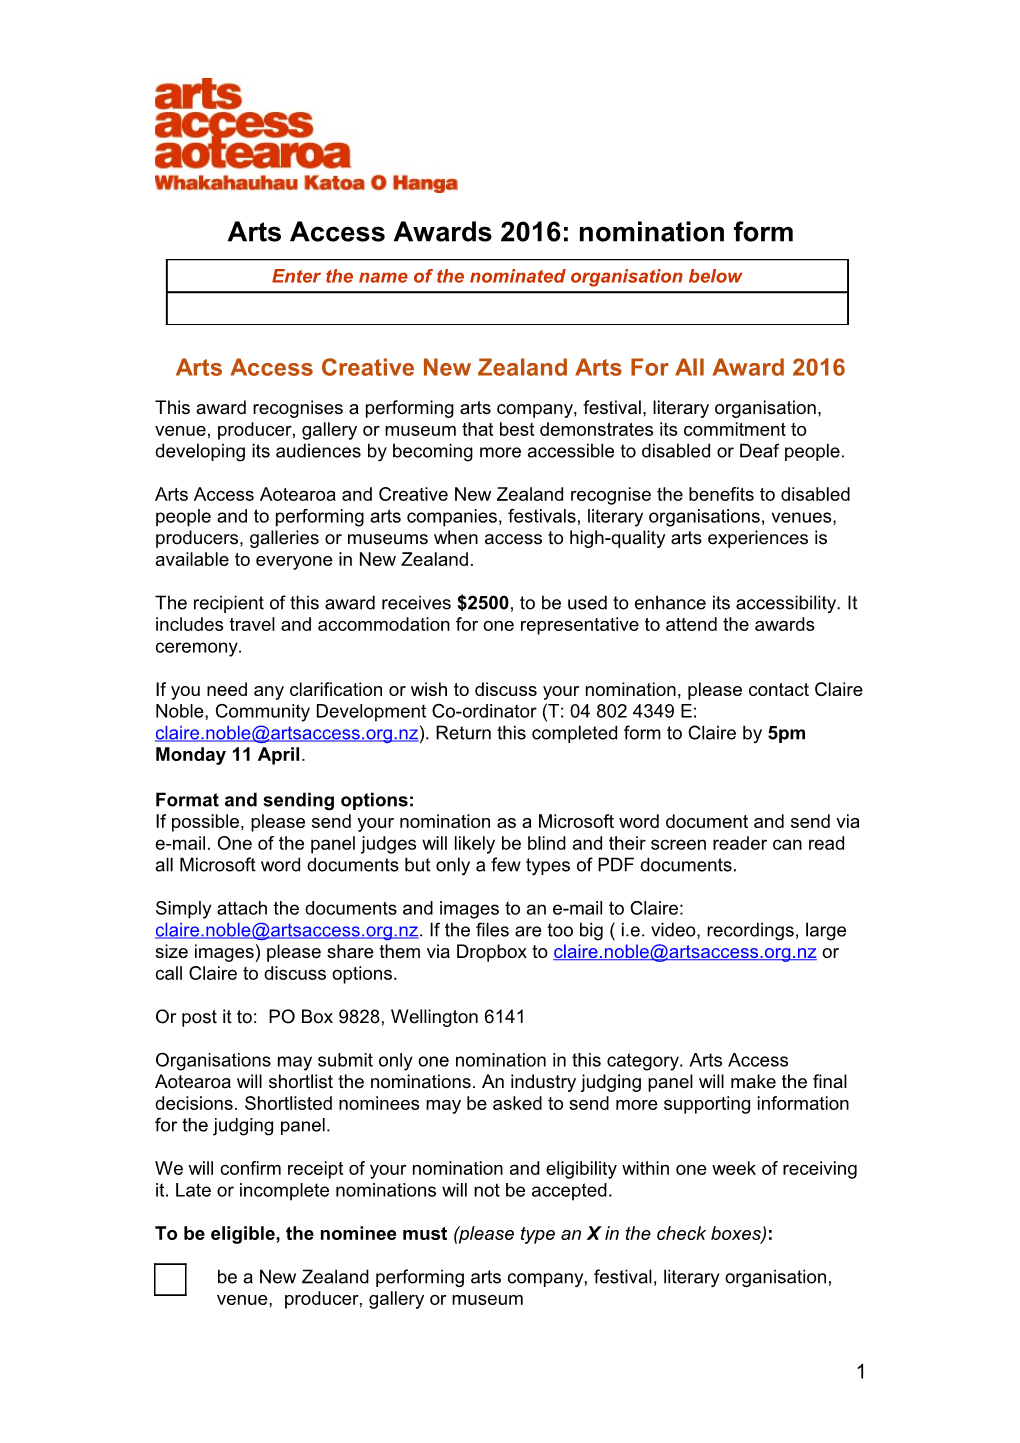 Arts Access Awards 2016: Nomination Form